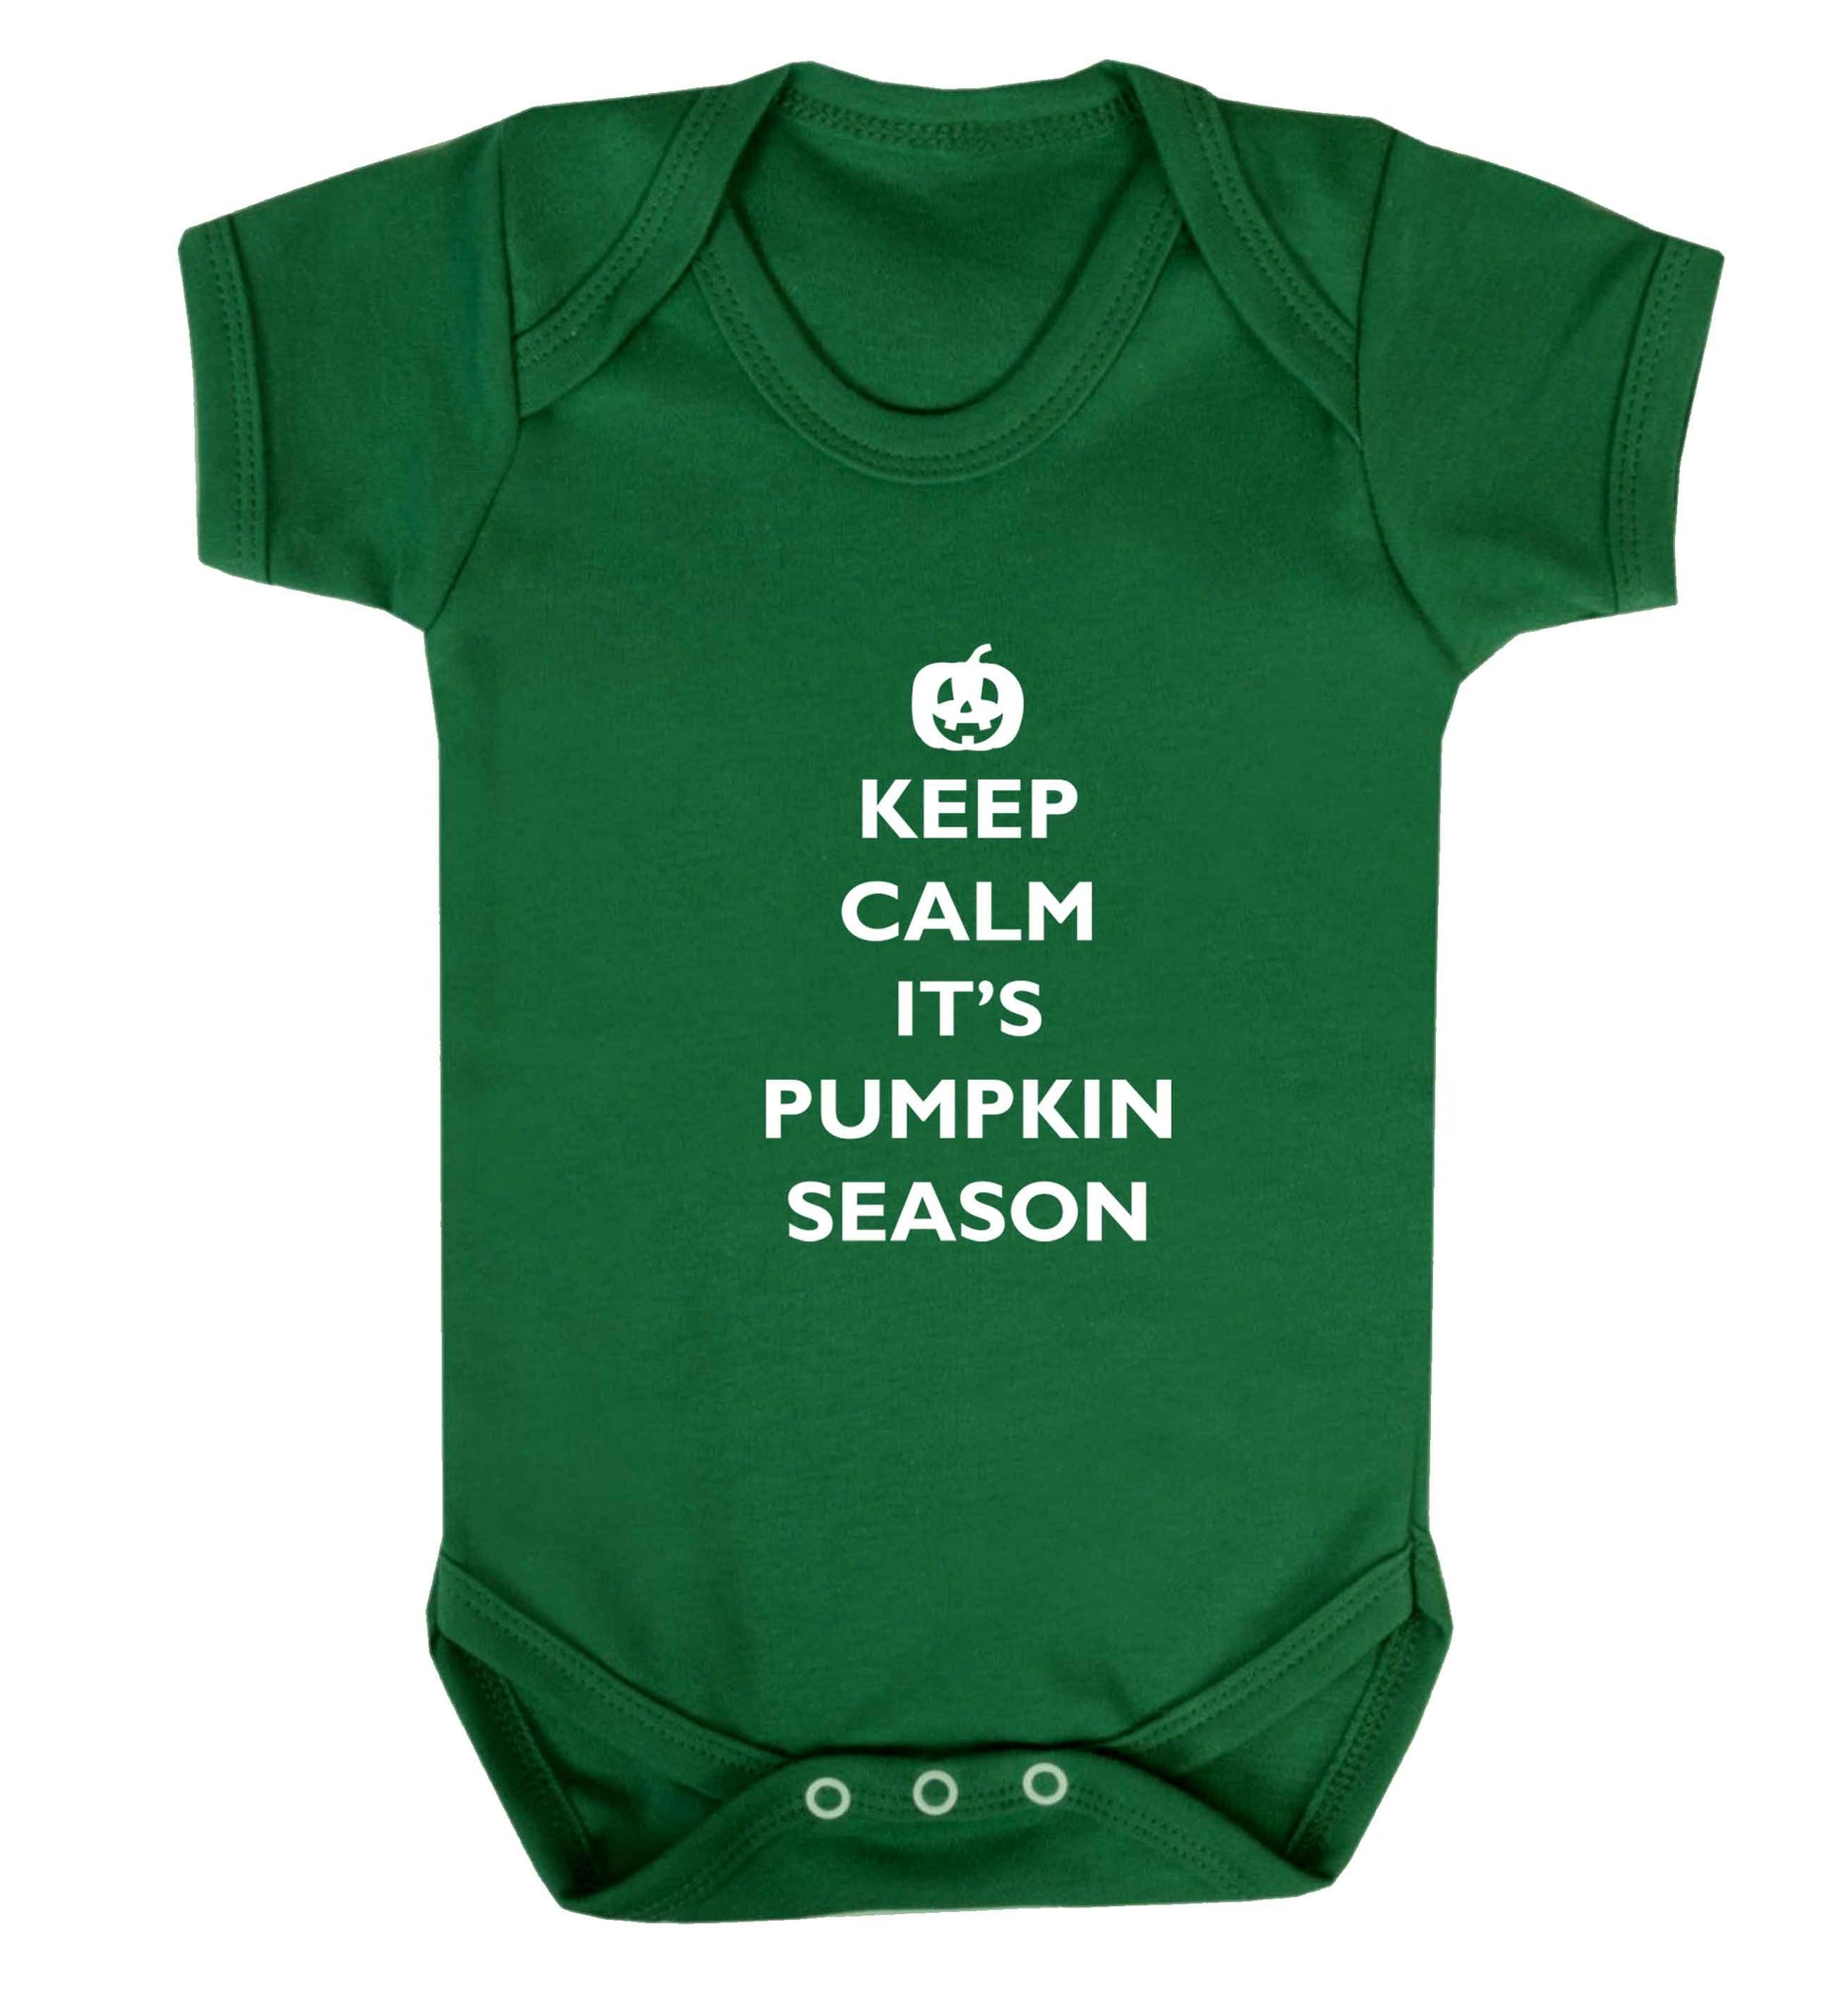 Calm Pumpkin Season baby vest green 18-24 months